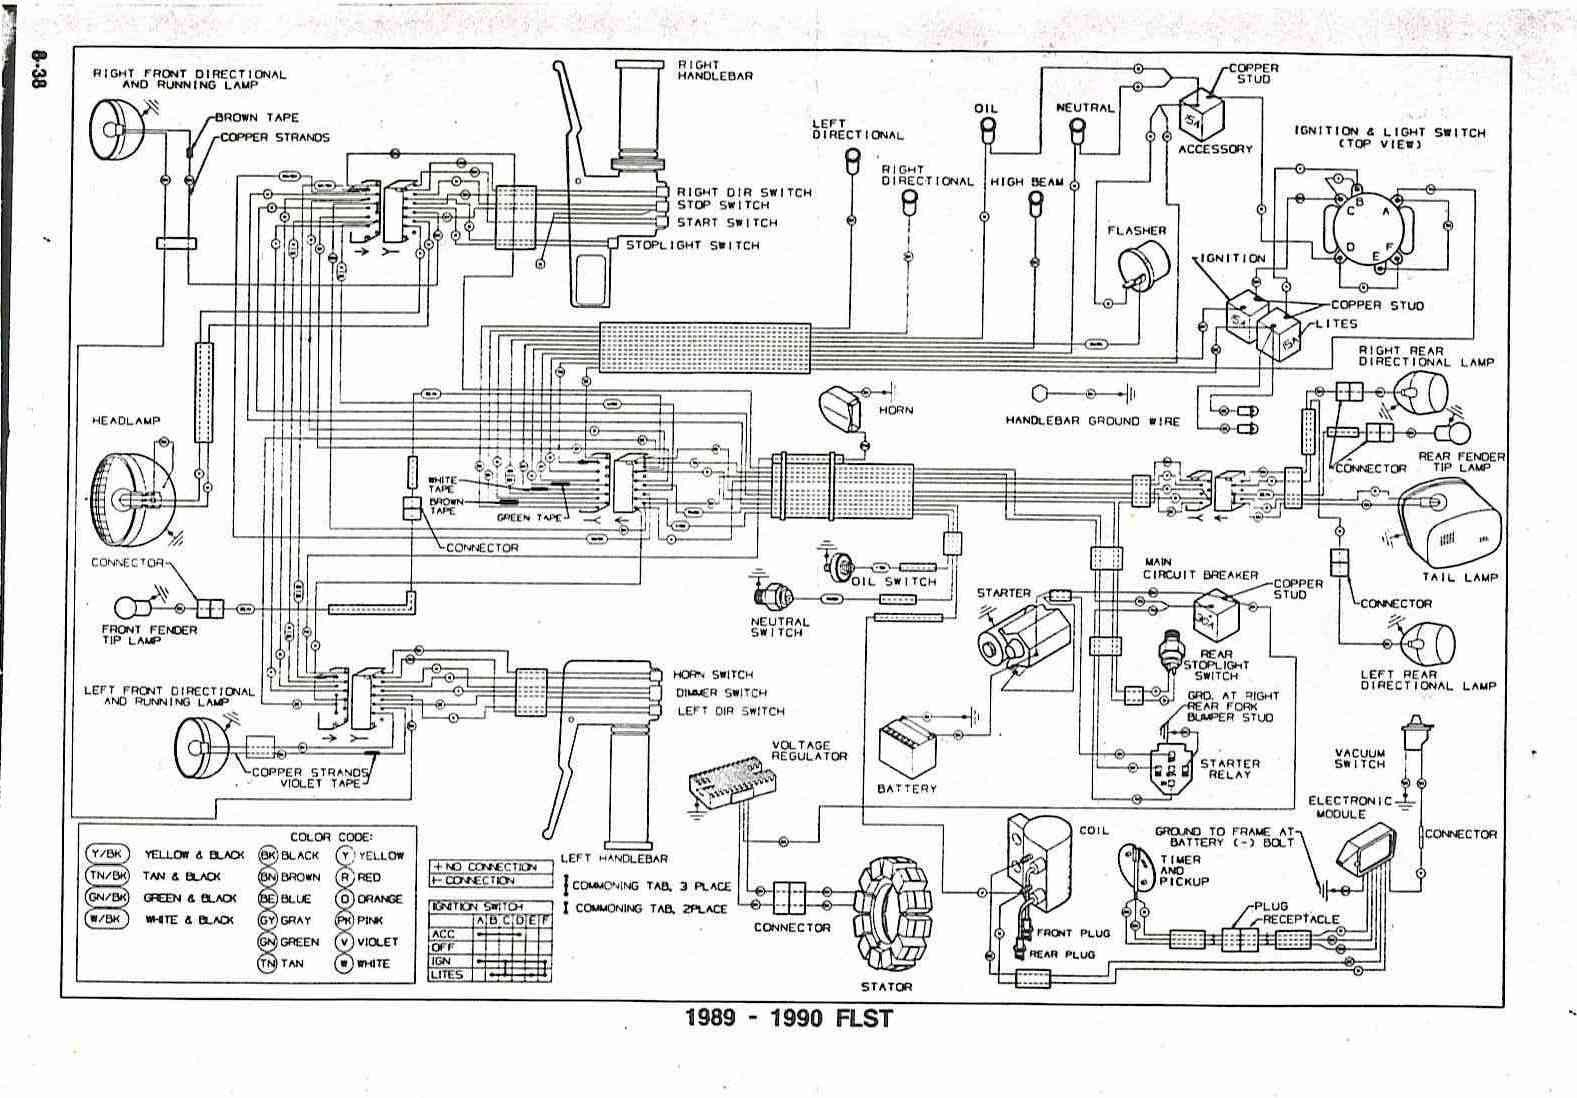 1990 Harley Davidson Wiring Diagram | Wiring Library - Harley Davidson Wiring Diagram Manual